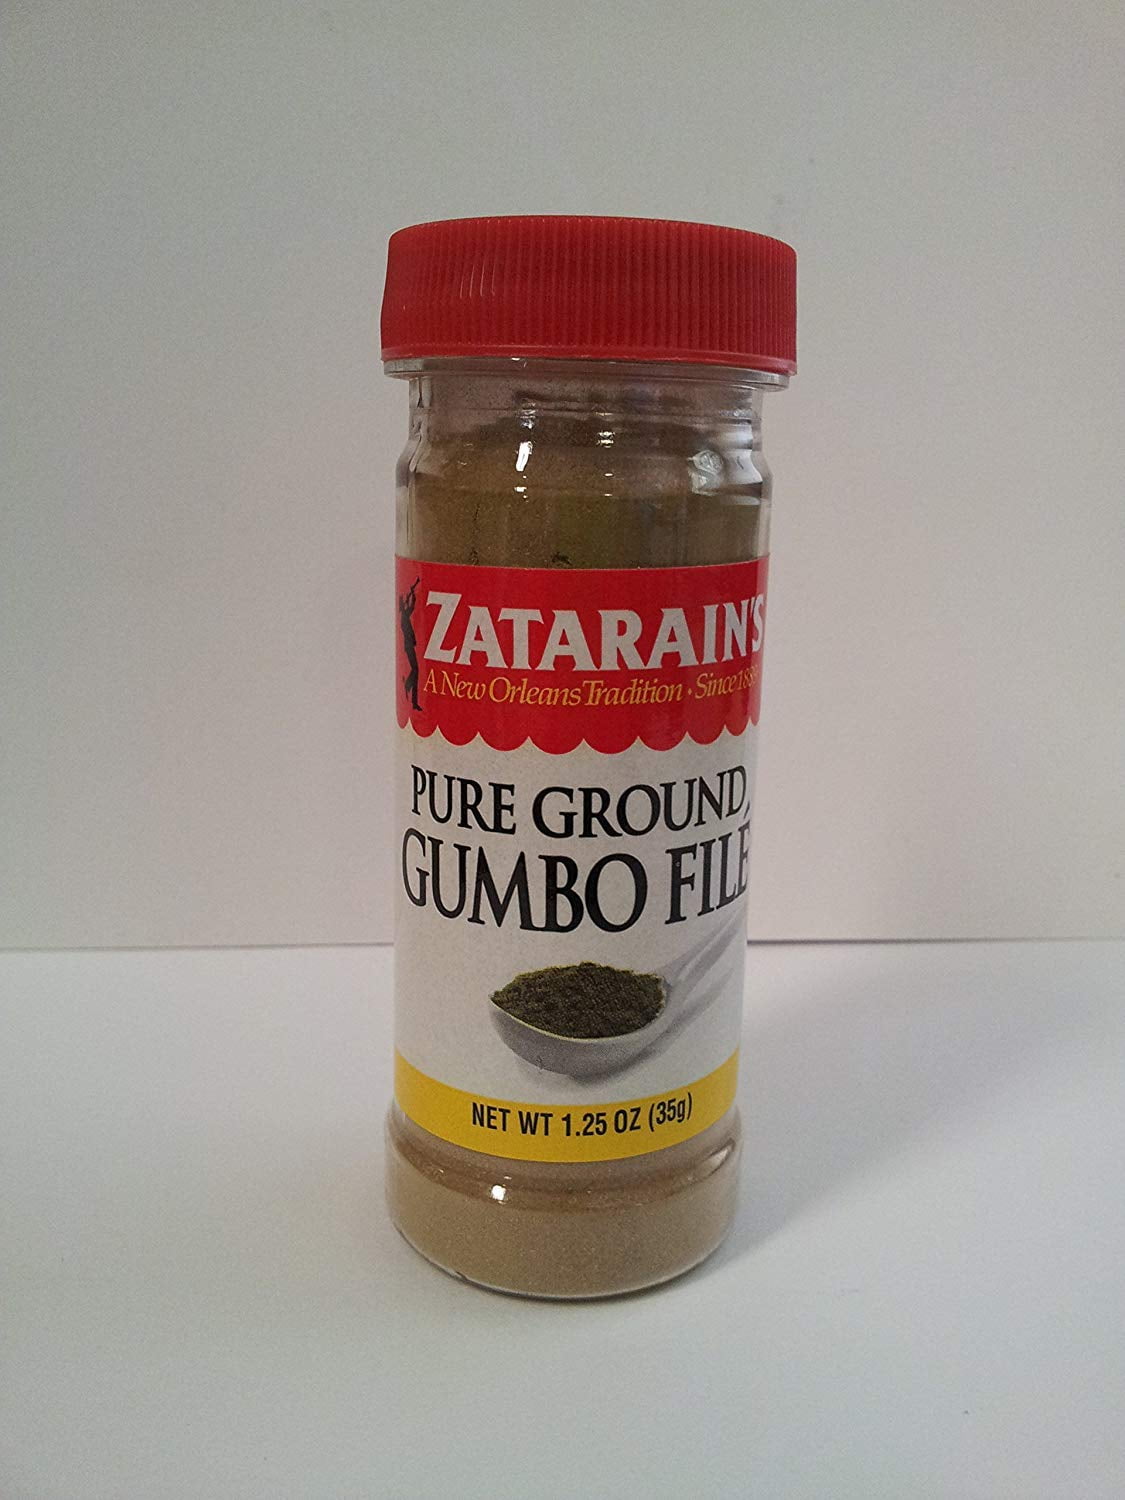  Zatarain's Pure Ground Gumbo File 1.25 oz : File